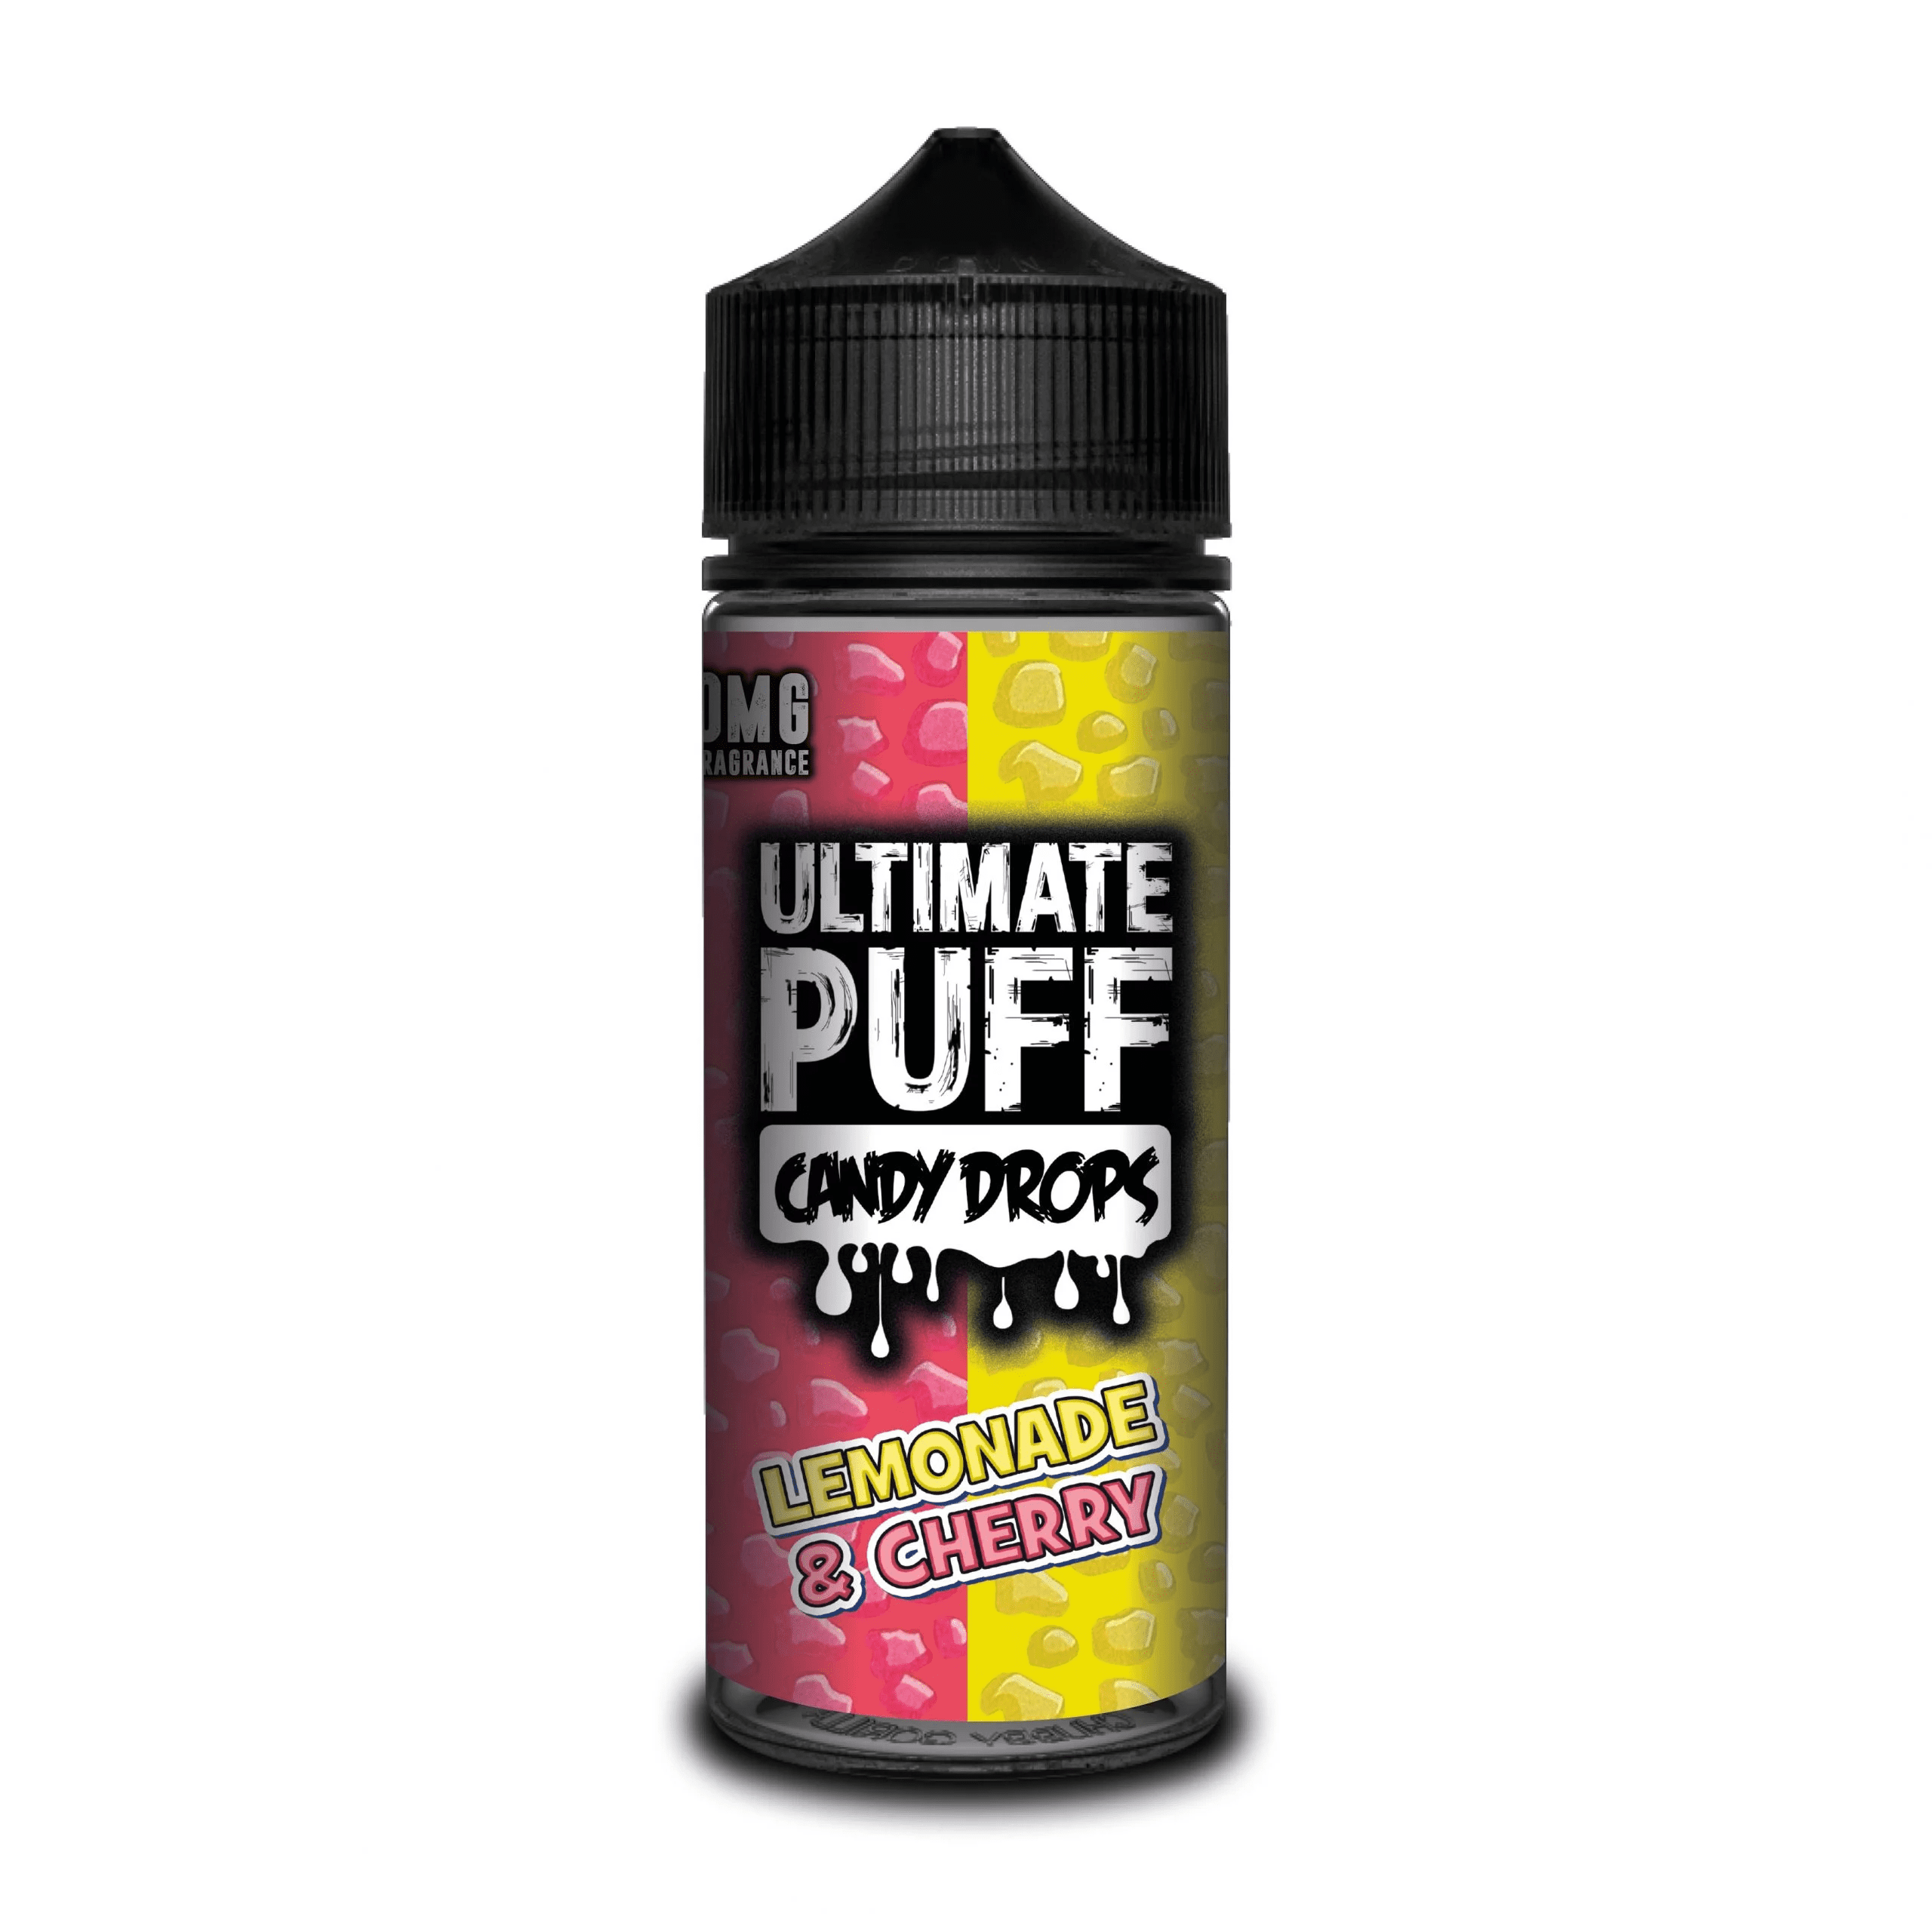  Ultimate Puff Candy Drops E Liquid - Lemonade & Cherry - 100ml 